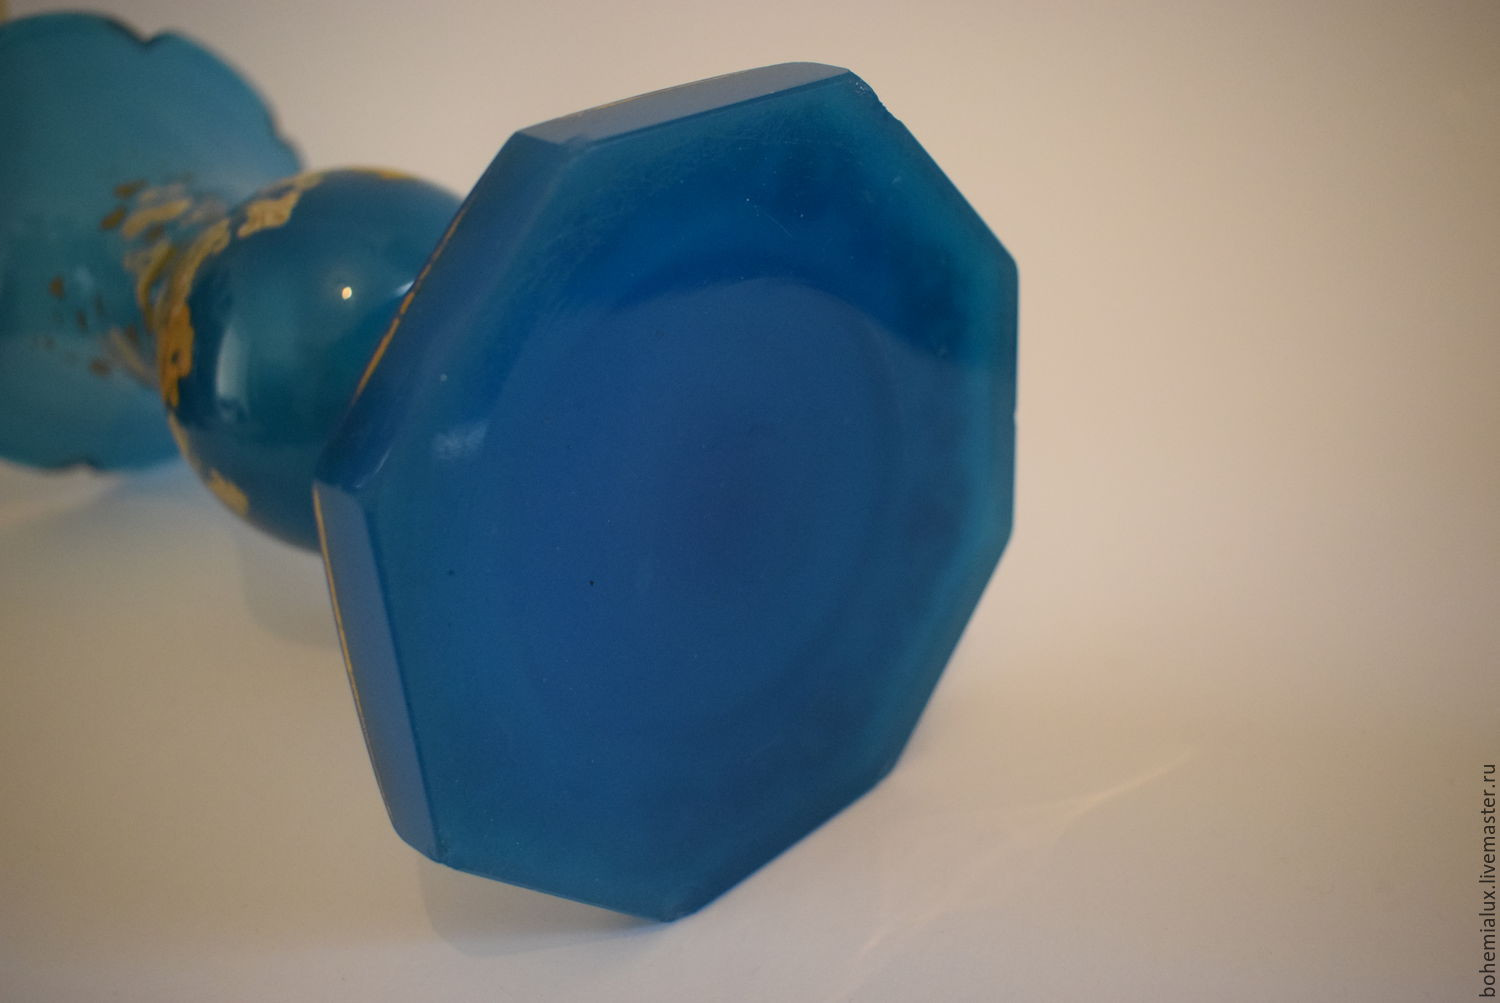 24 Elegant Azure Blue Art Glass Vase 2024 free download azure blue art glass vase of antique opal glass vase 33 cm over 200 years bohemia shop online pertaining to vintage interior decor antique opal glass vase 33 cm over 200 years bohemia bohemi